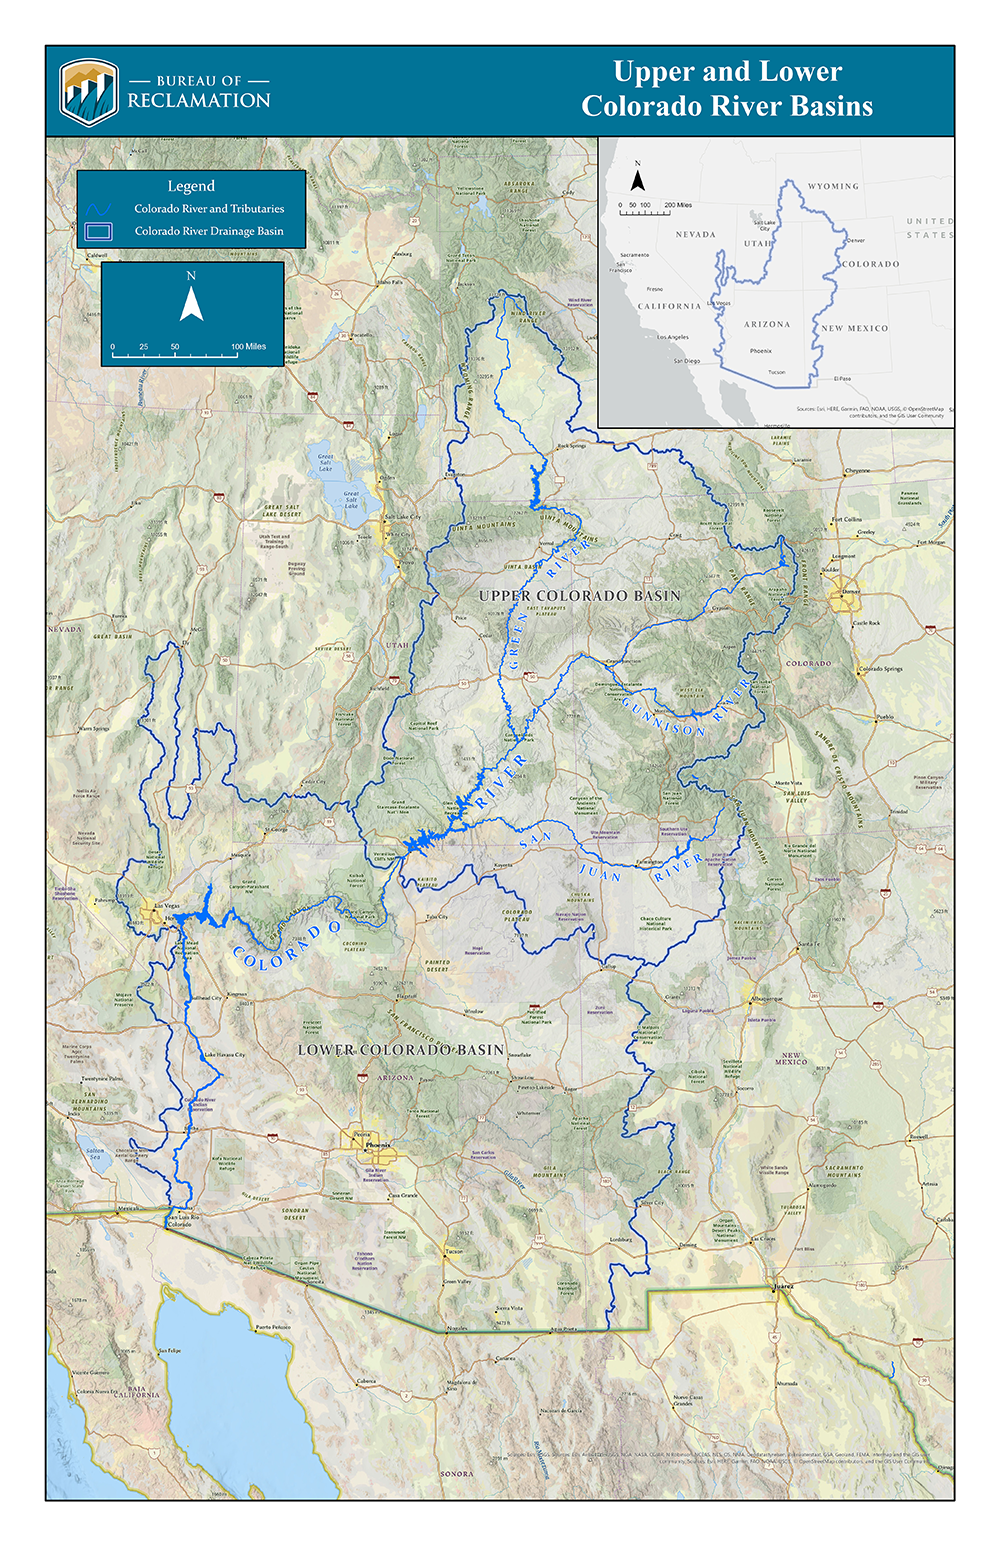 Colorado River Basin  Bureau of Reclamation